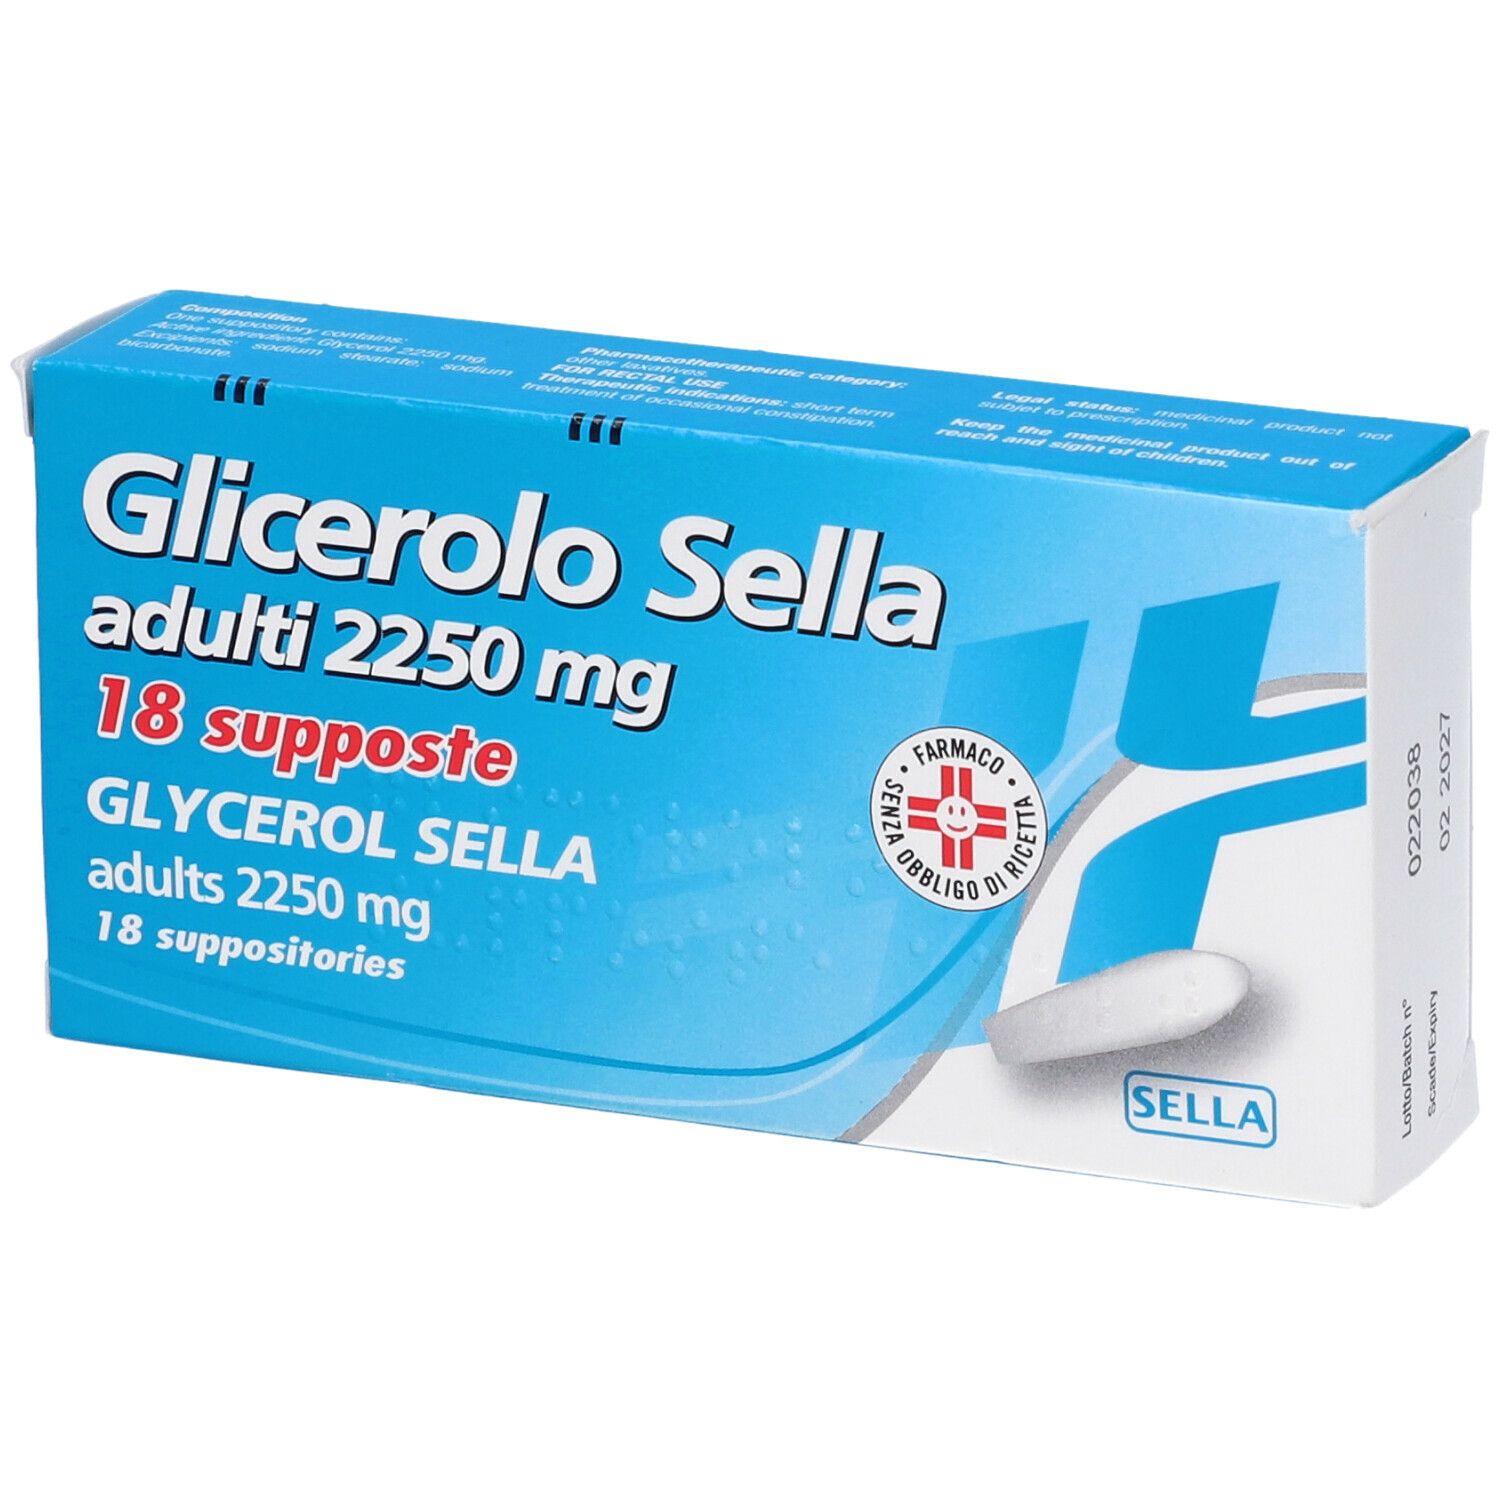 GLICEROLO SELLA Adulti 2250 mg